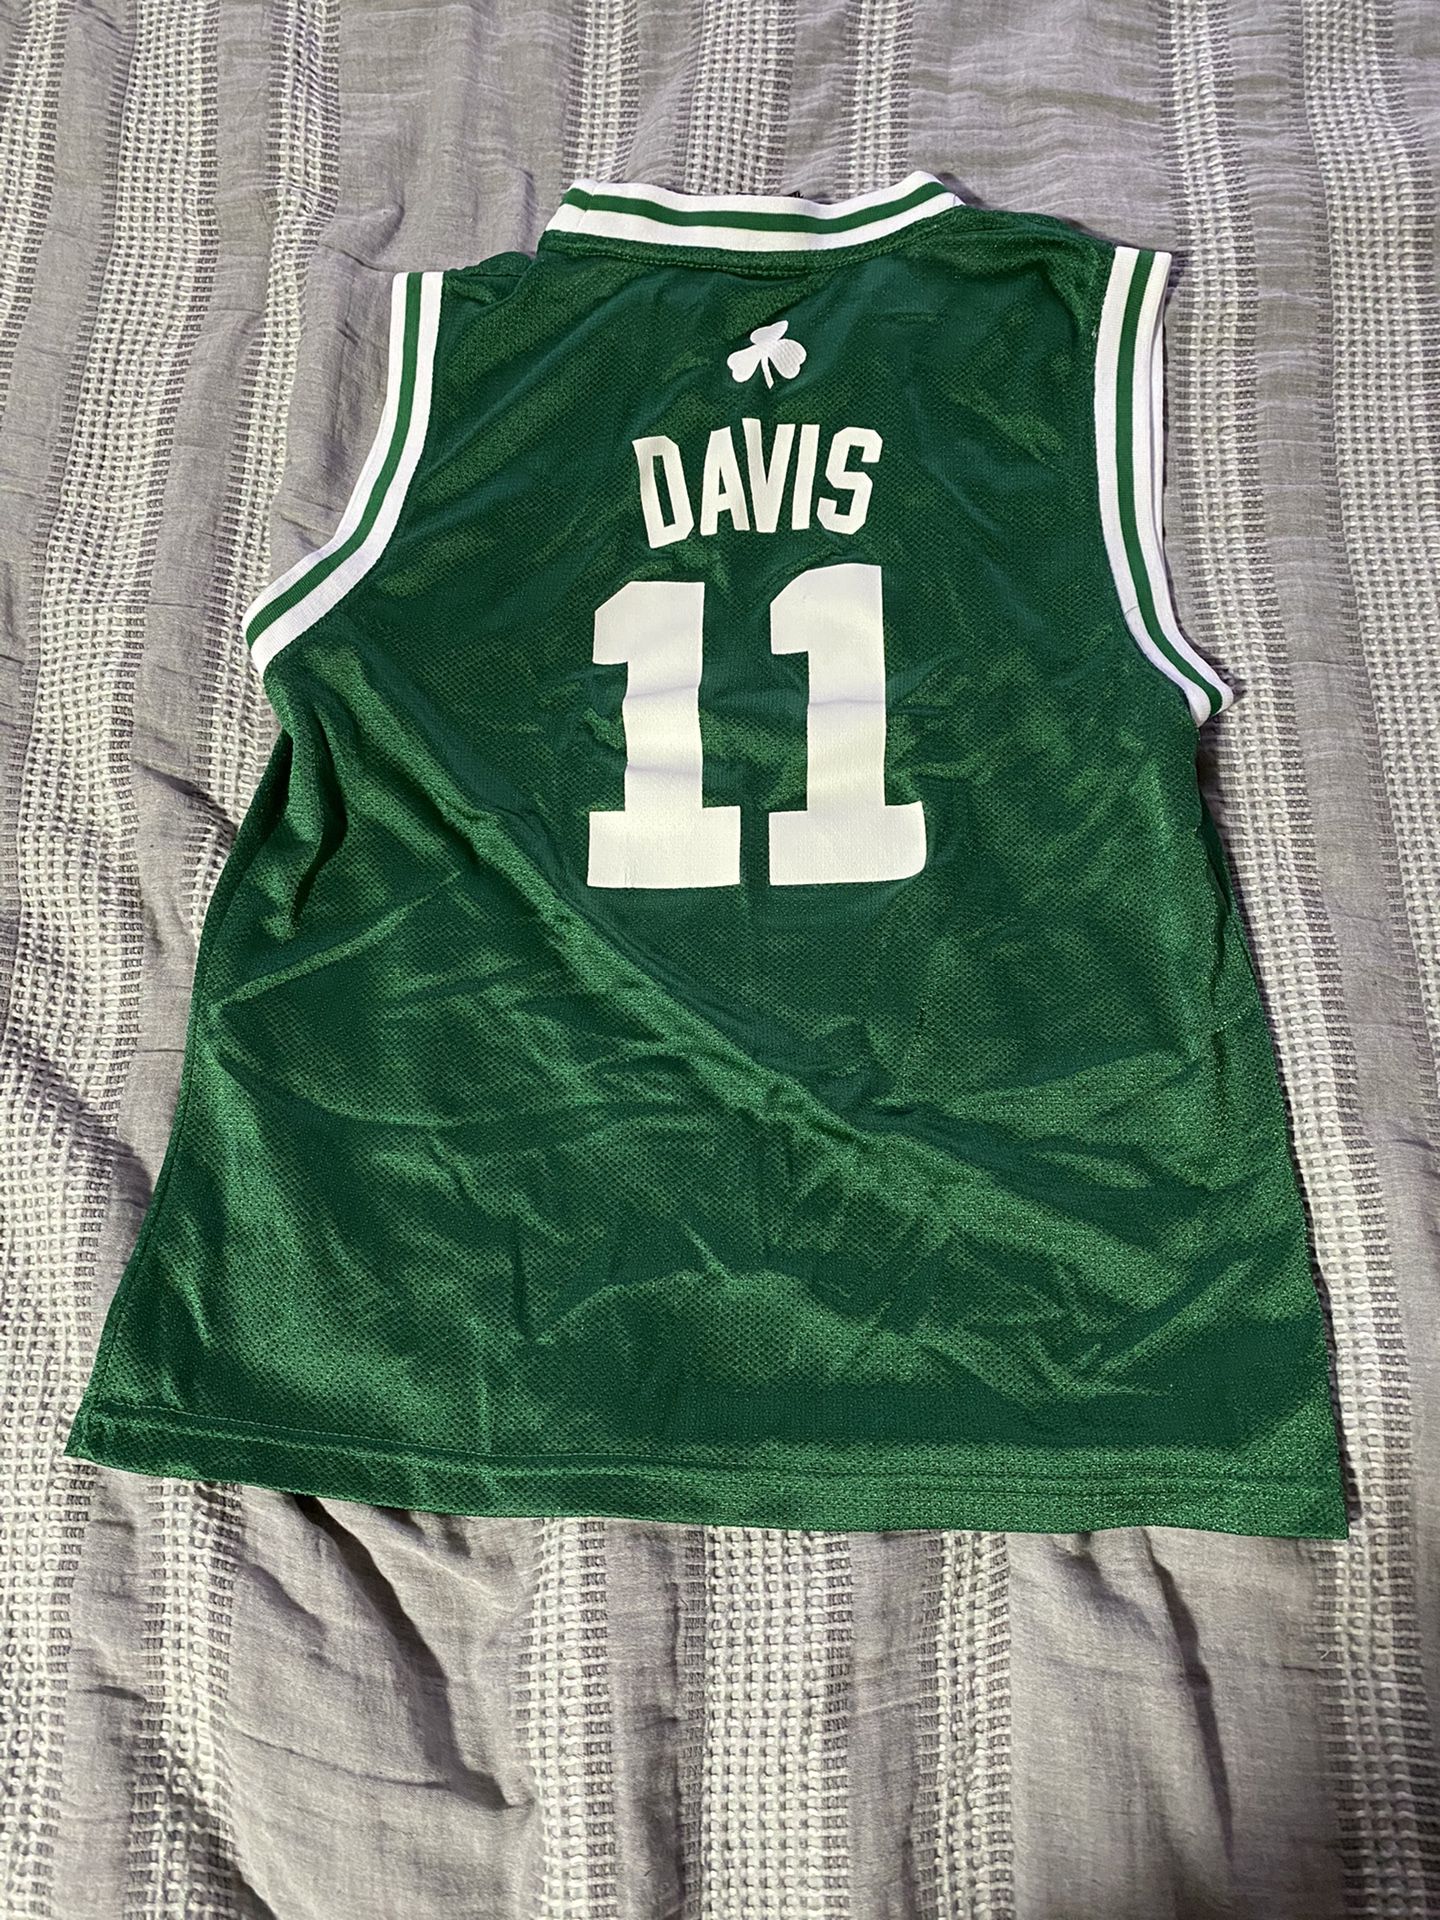 Boston Celtics Glen Davis kids jersey